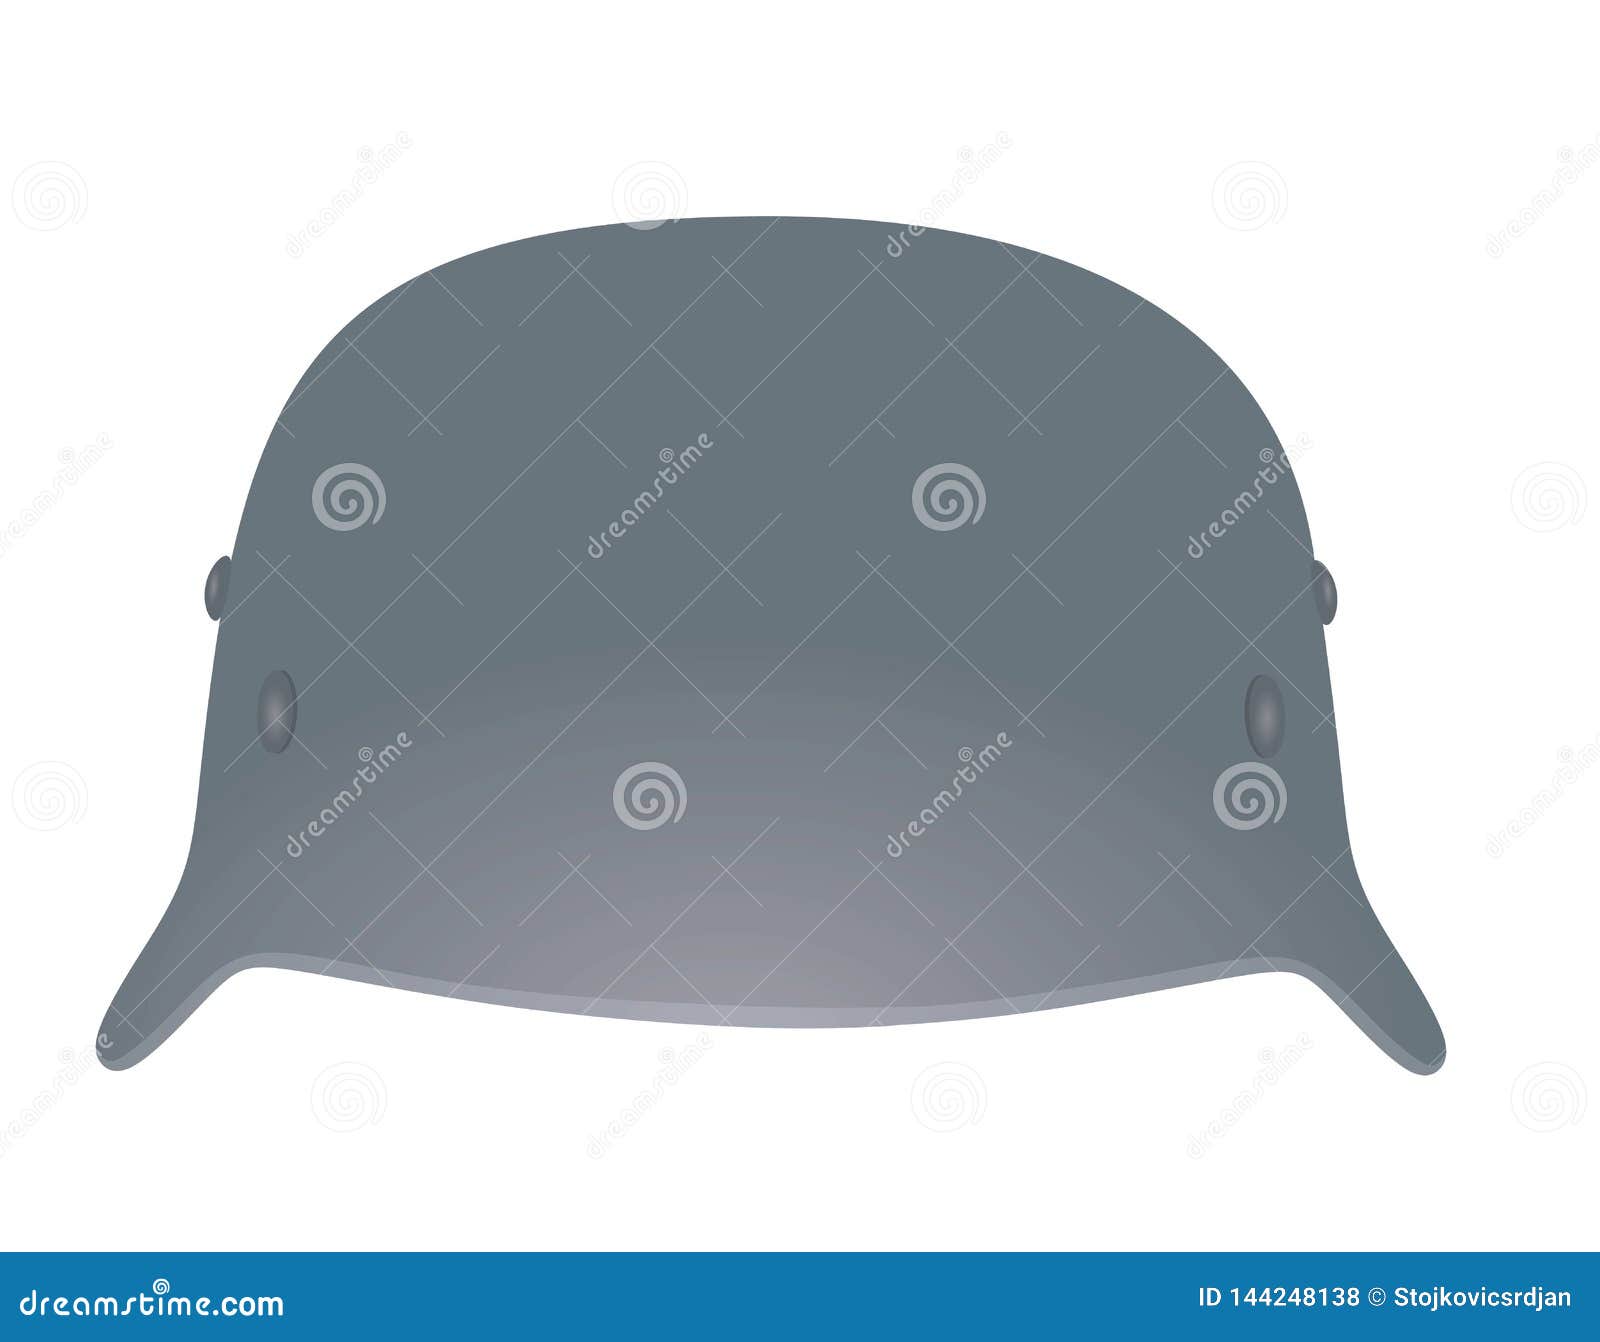 Military metal helmet stock vector. Illustration of helmet - 144248138